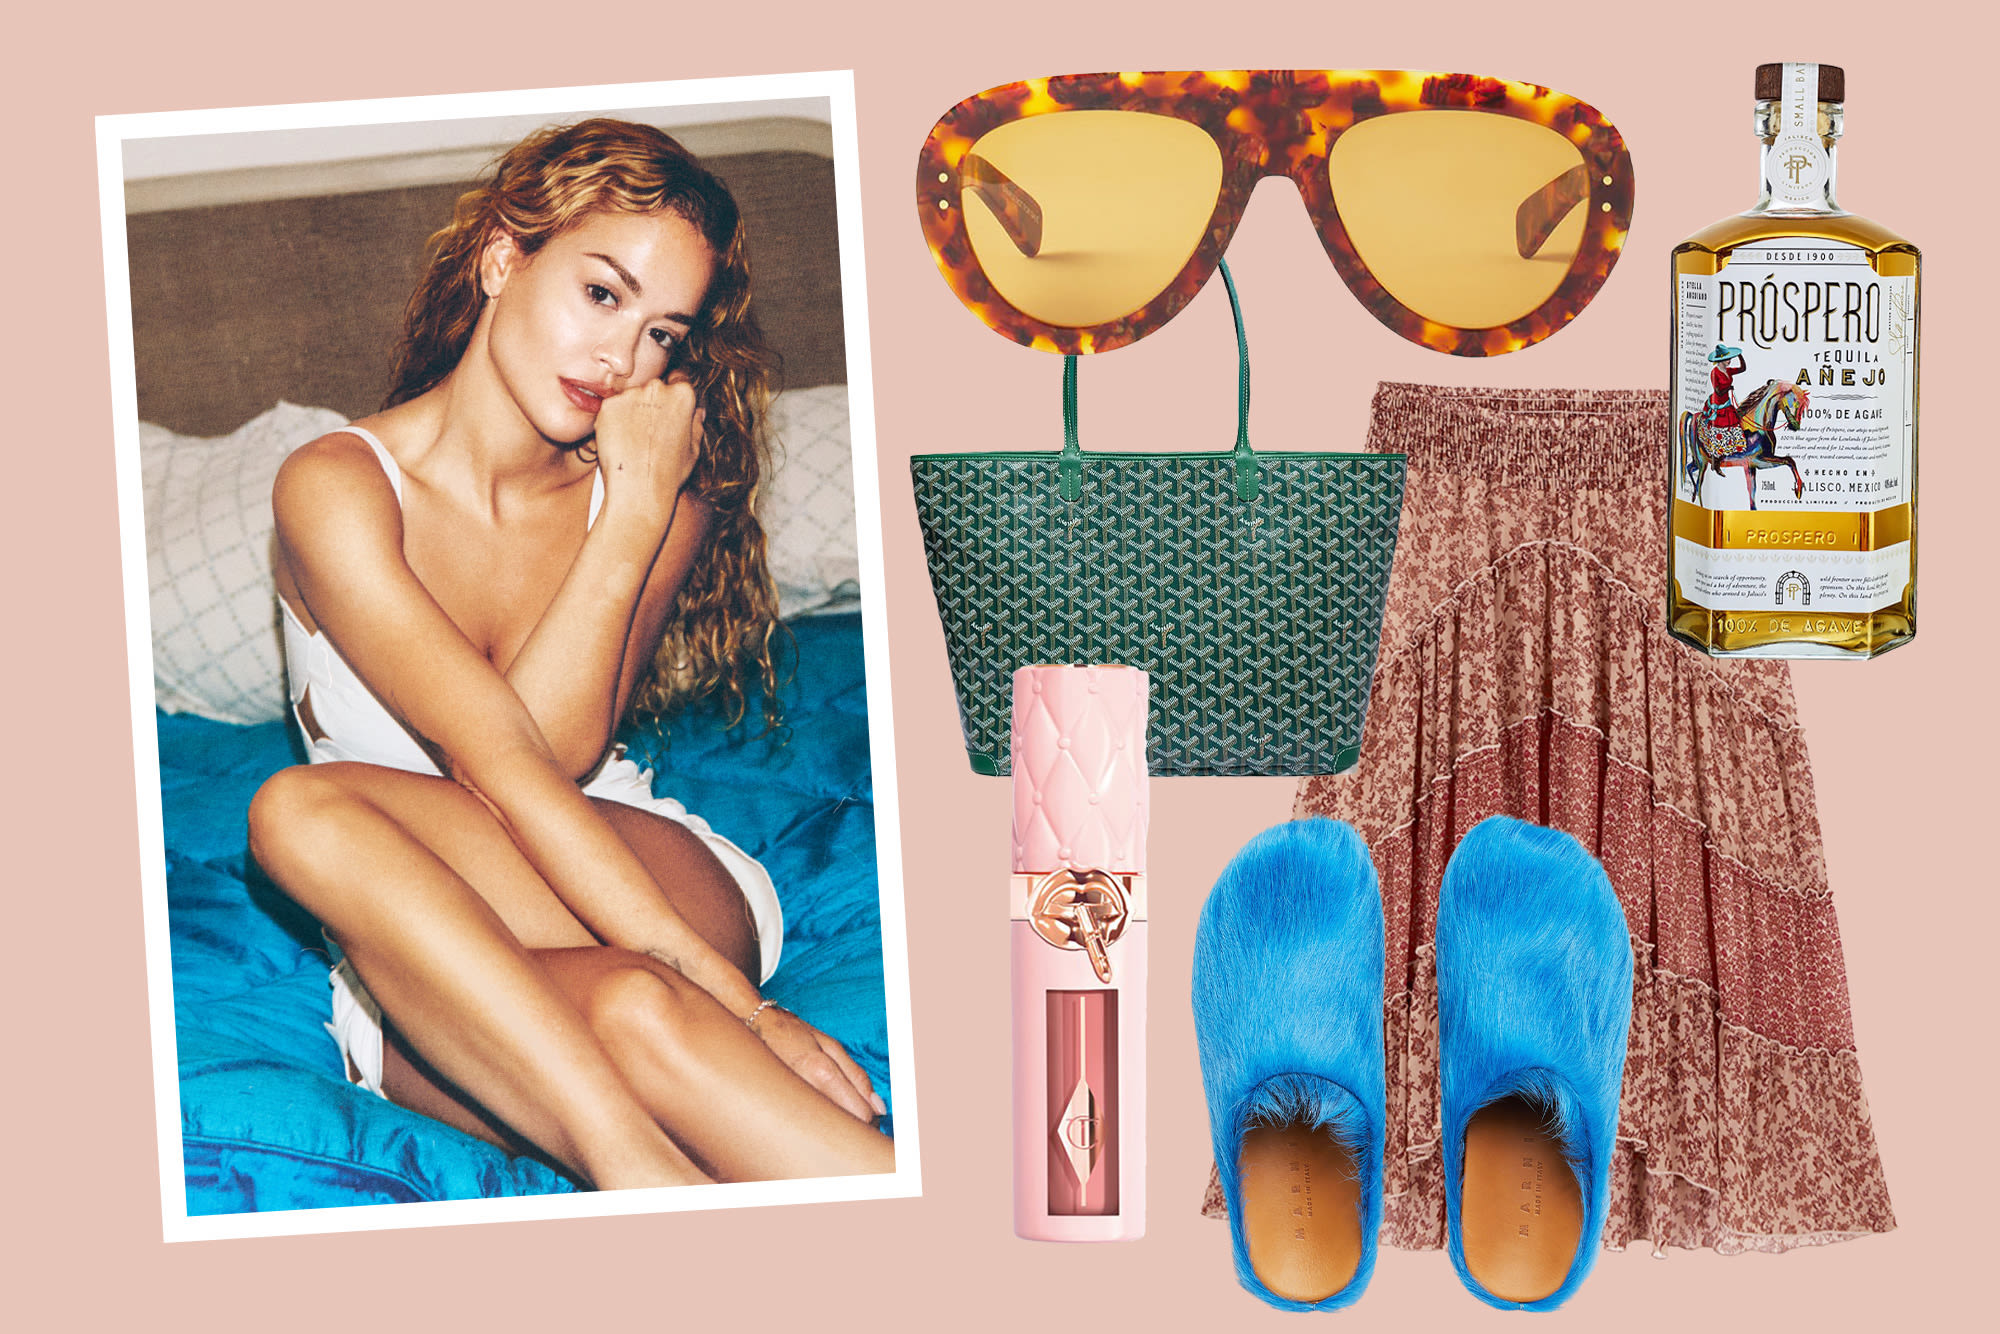 Singer-actress-entrepreneur Rita Ora on shoes, shades and shopping addictions